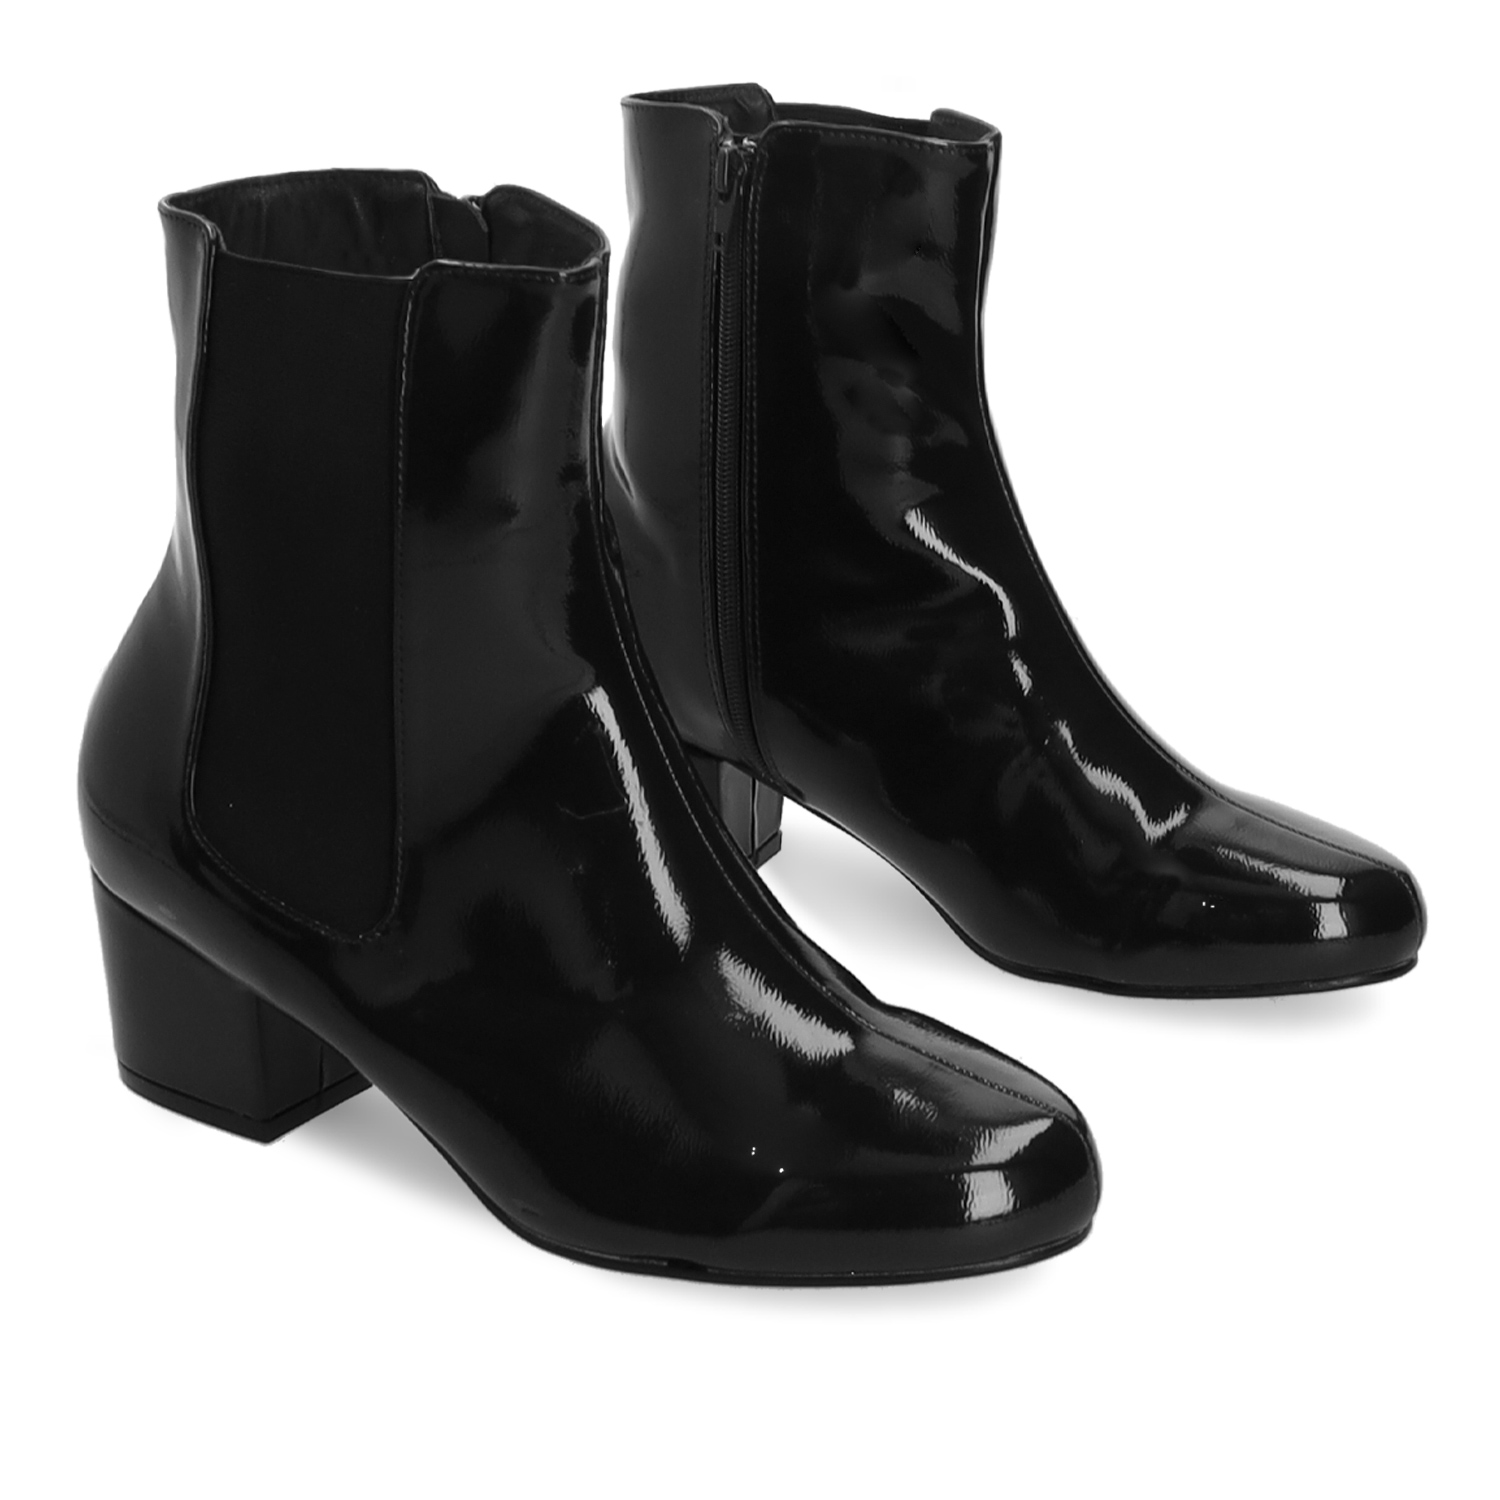 Wide heel booties in black patent and matching elastic 